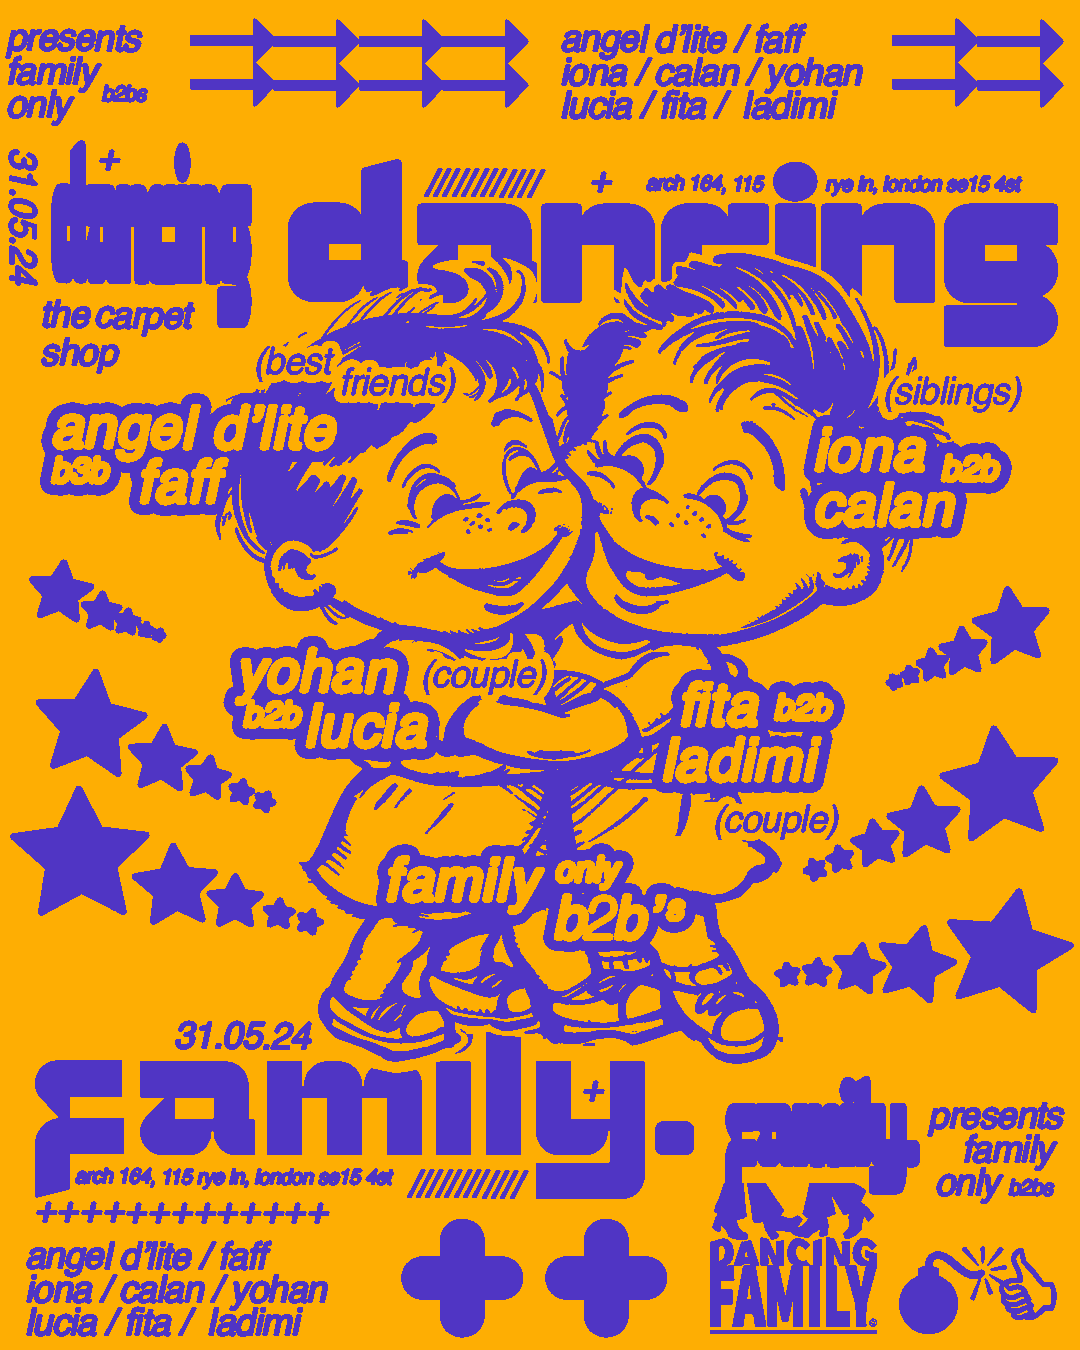 Dancing Family: Angel D'lite b2b FAFF, iona b2b calan, Fita b2b LaDimi, Yohan b2b Lucia - フライヤー表